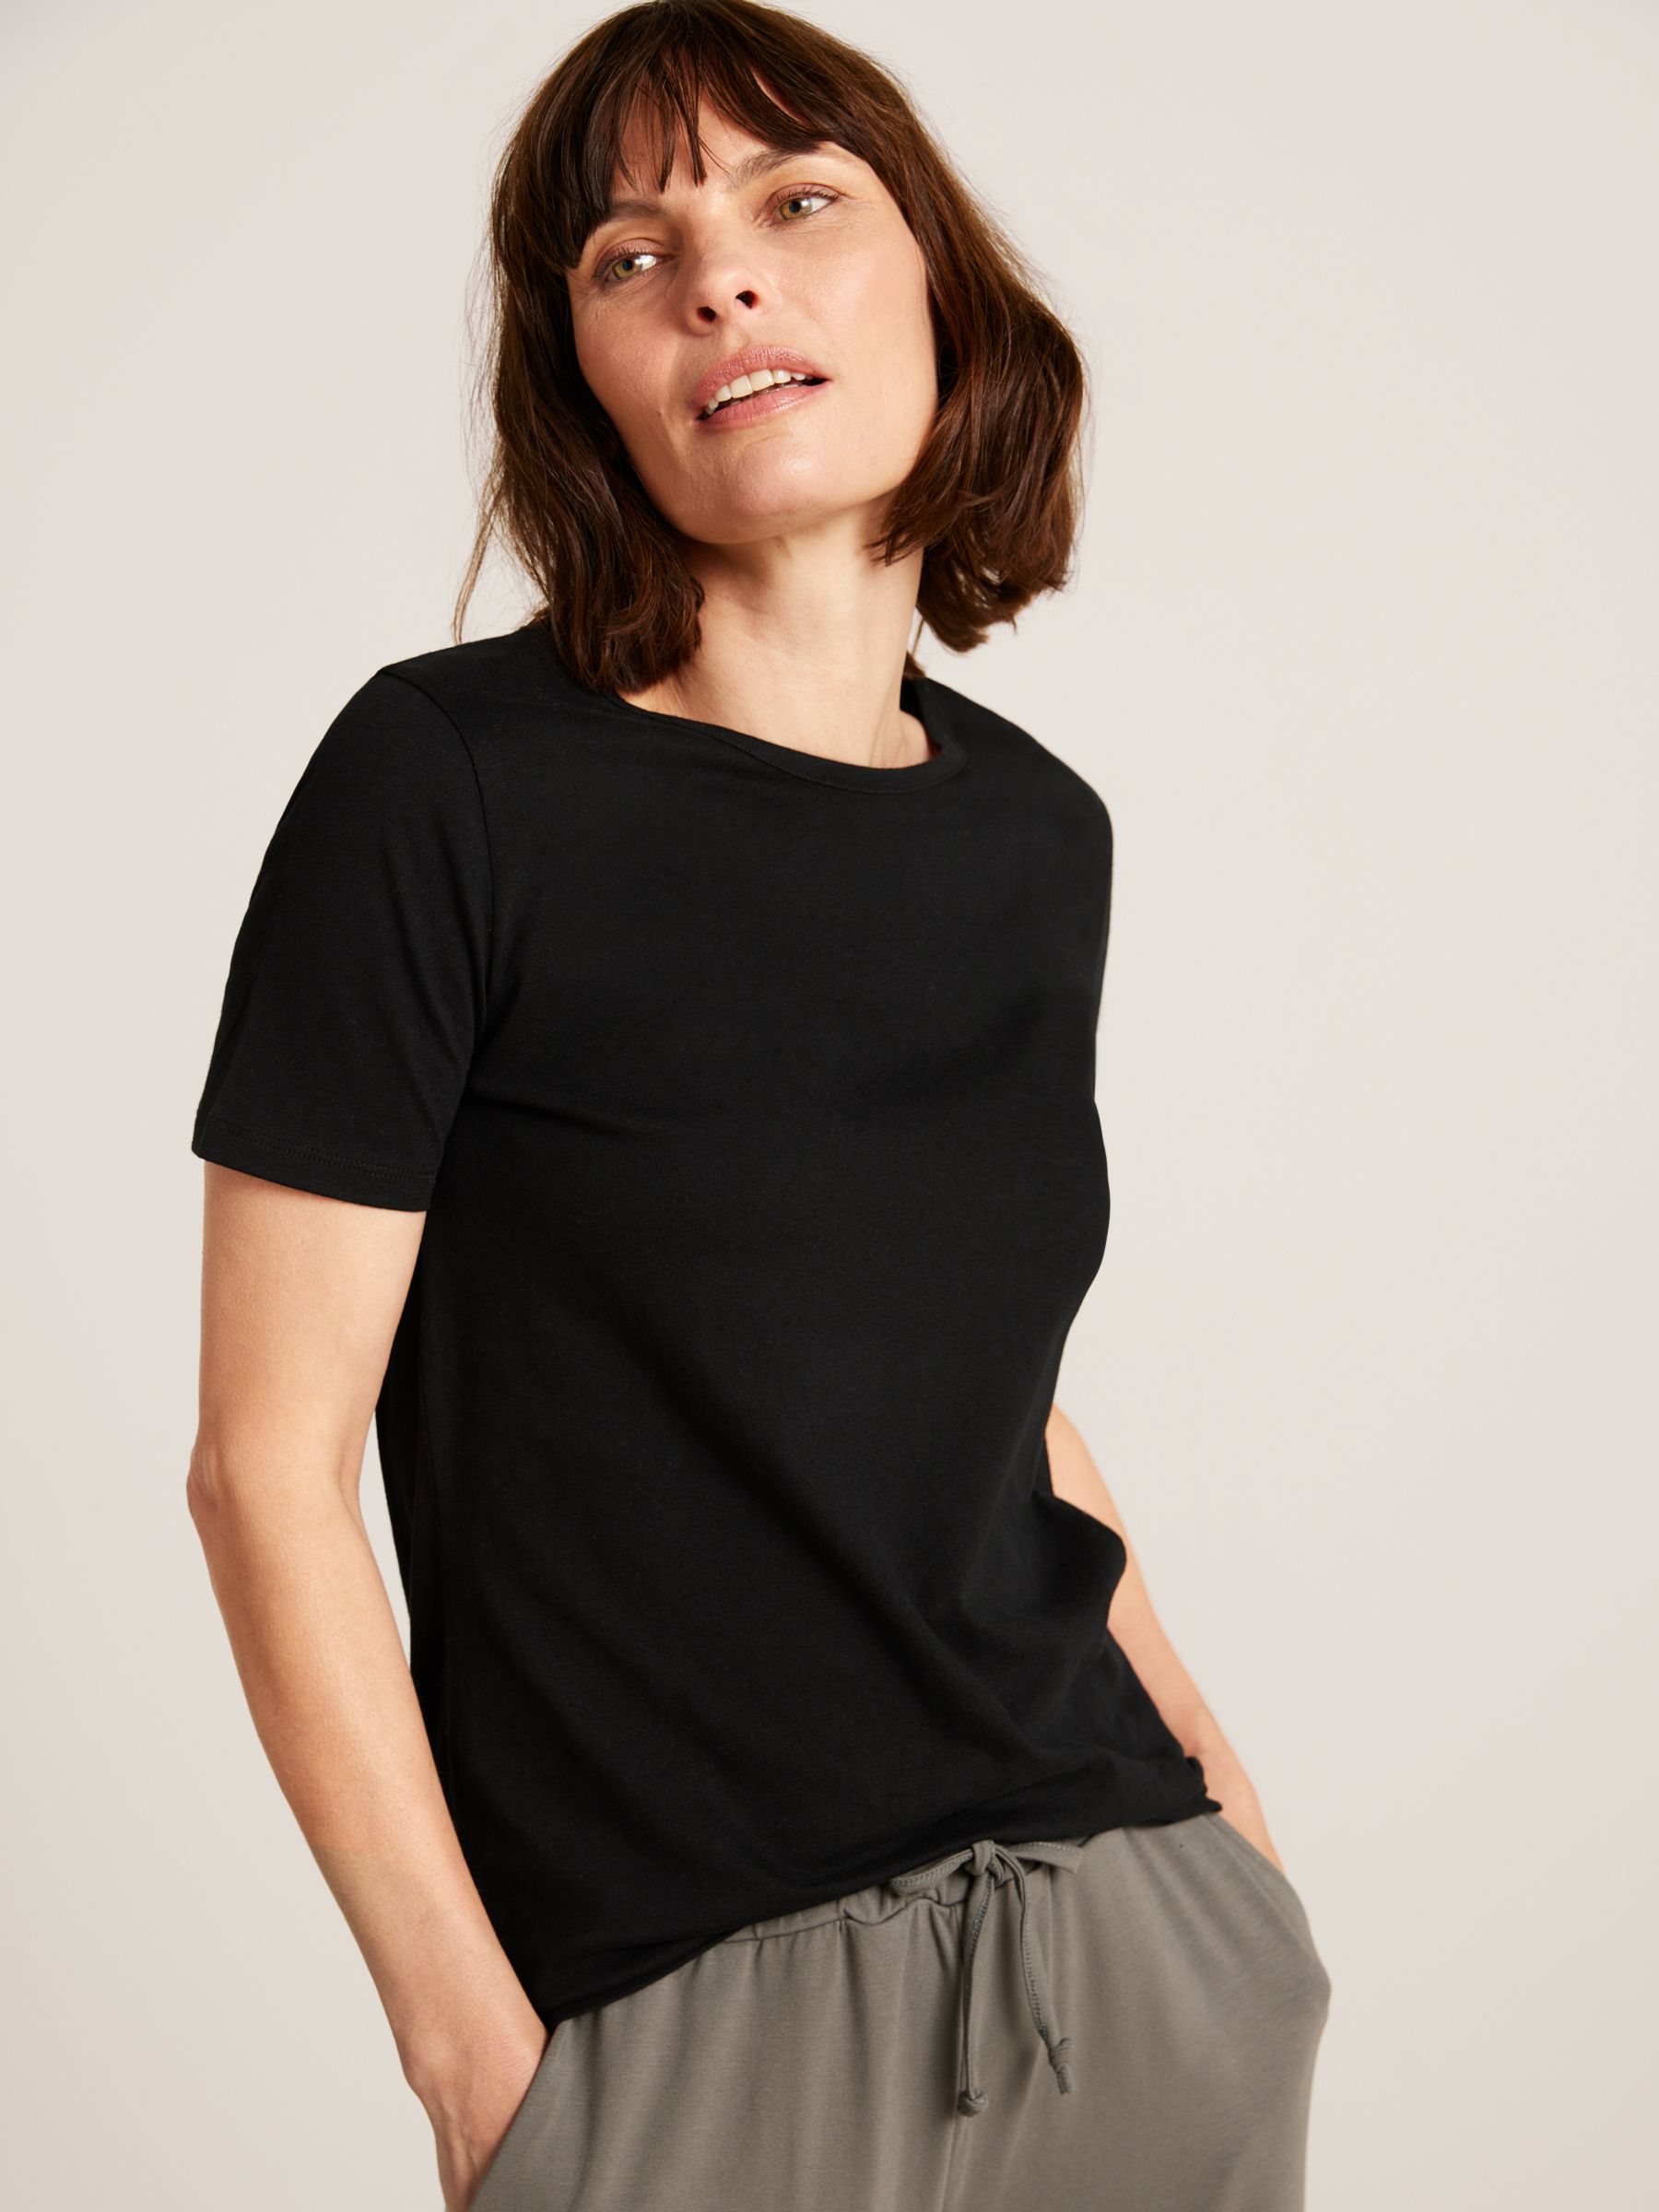 WOMEN FASHION Shirts & T-shirts Lace discount 91% Alía T-shirt Navy Blue S 